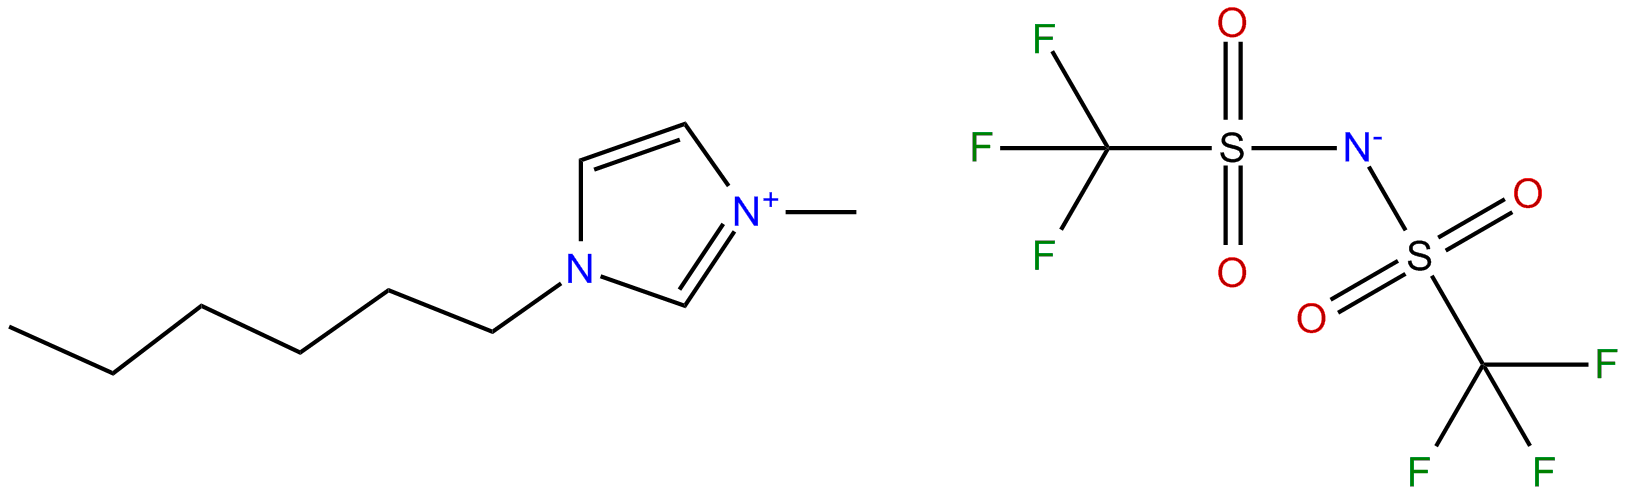 Image of 1-hexyl-3-methylimidazolium bis[(trifluoromethyl)sulfonyl]imide